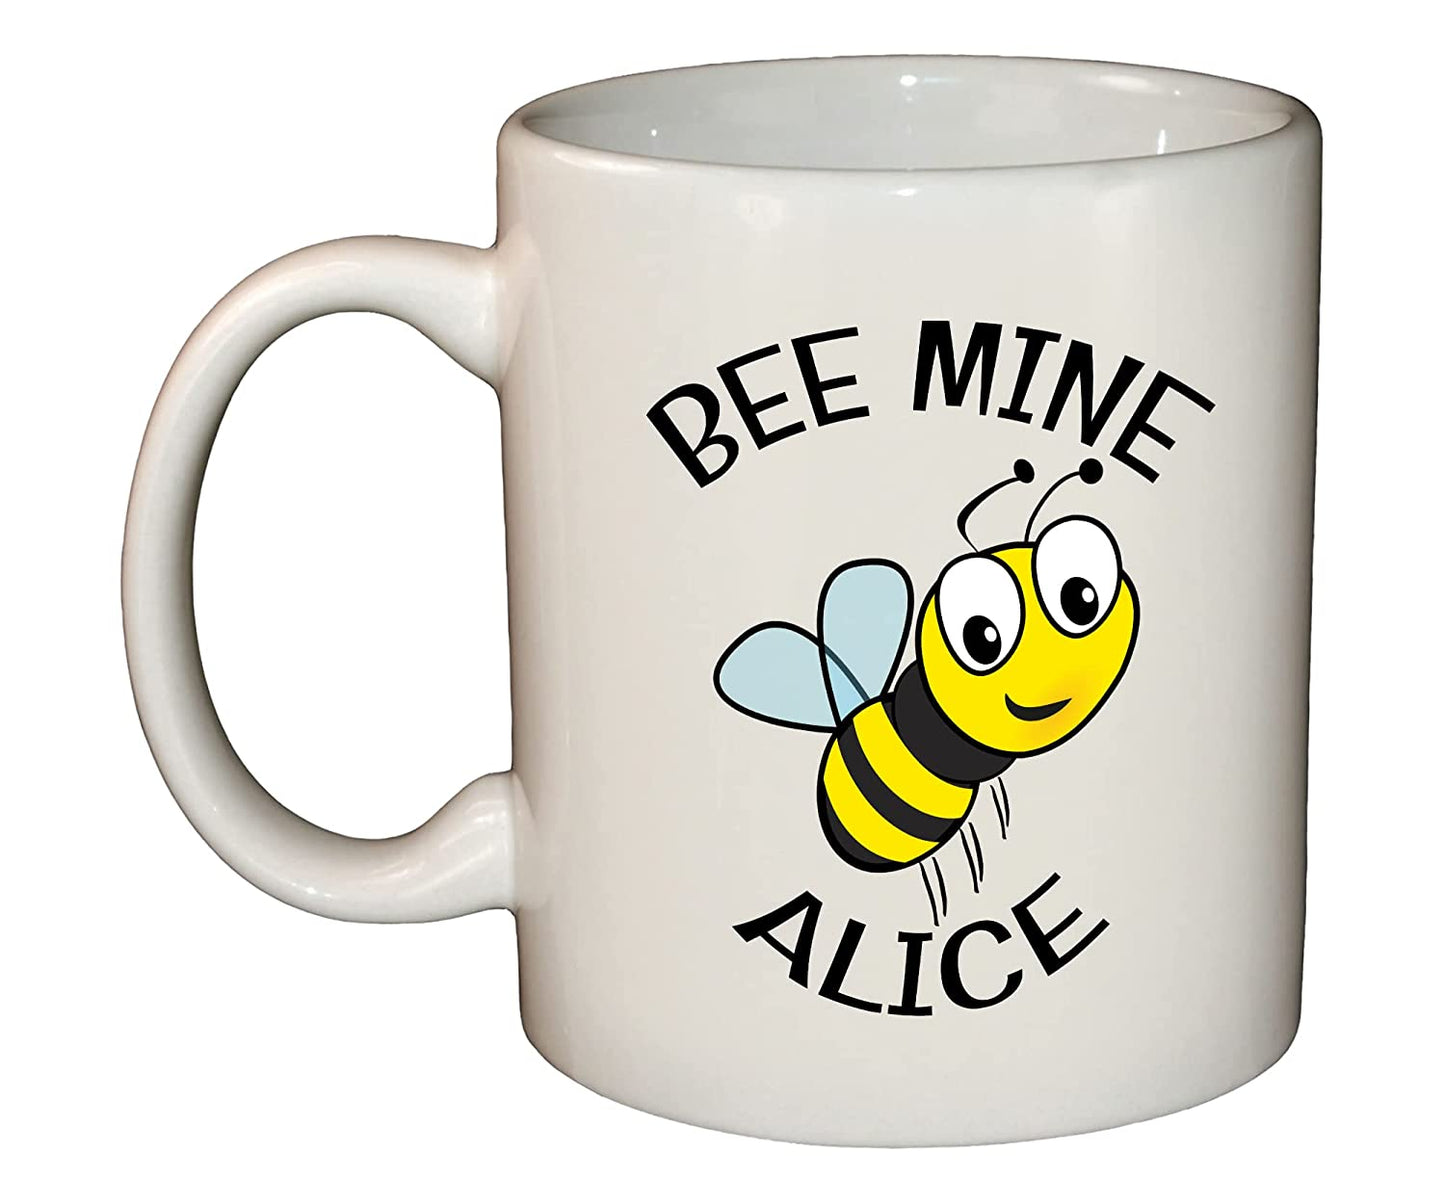 Bee Mine Name Personalised Ceramic Mug